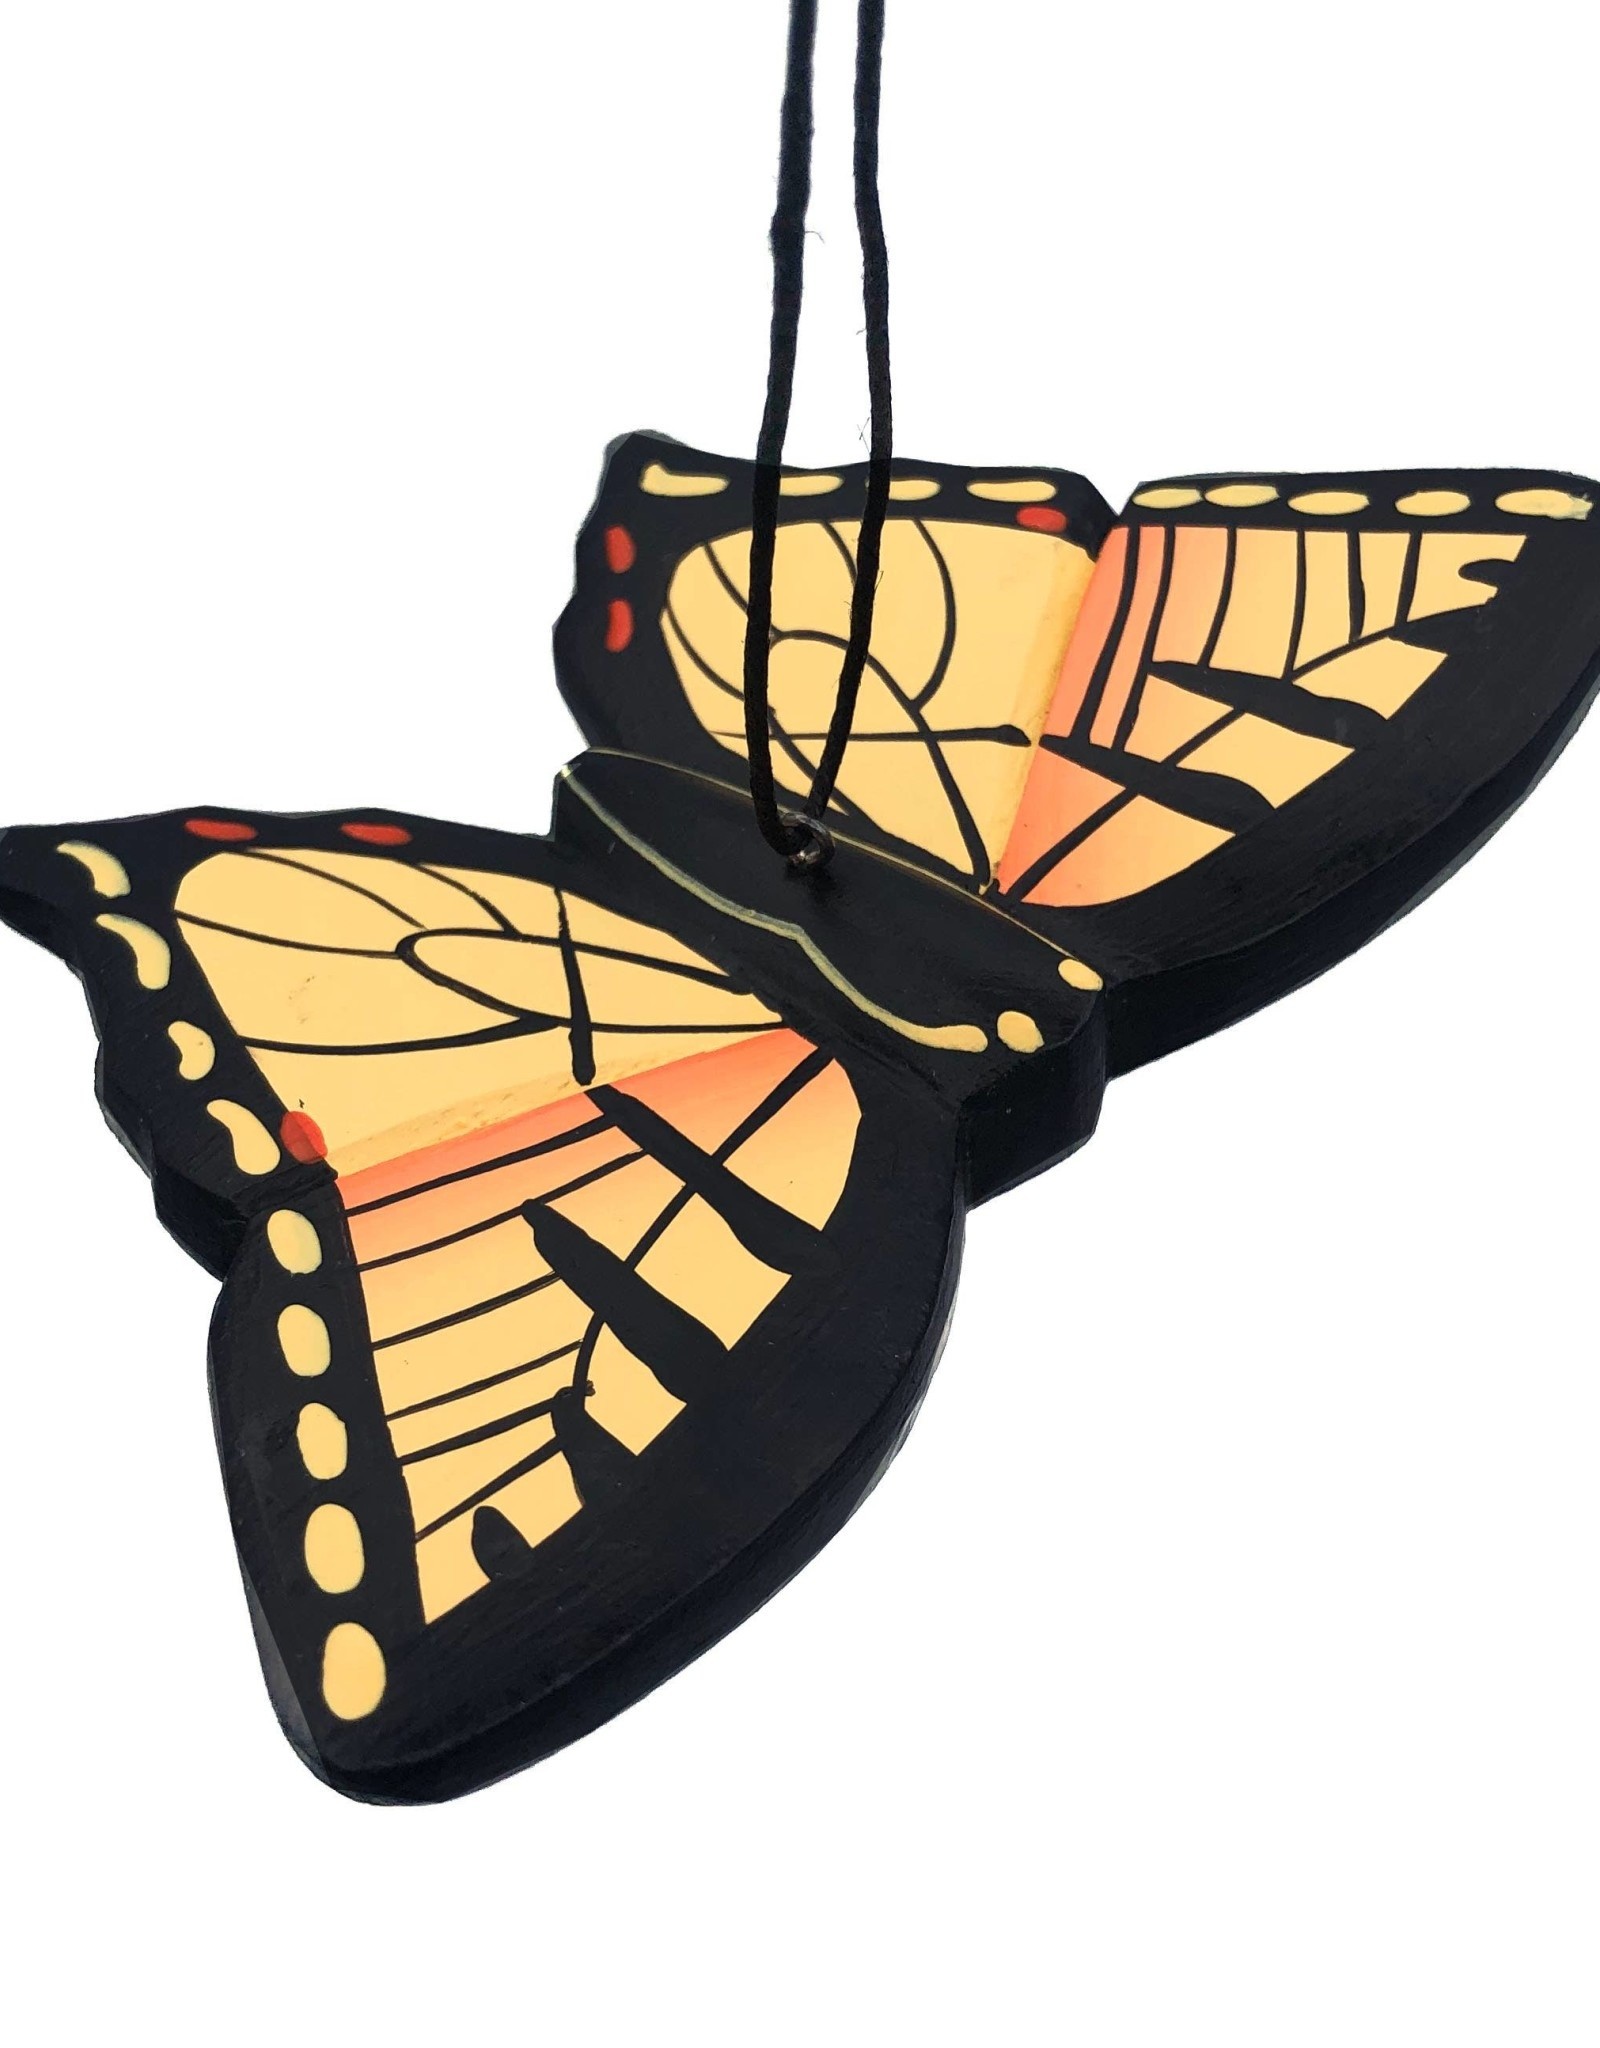 Women of the Cloud Forest Tiger Swallowtail Butterfly Balsa Ornament